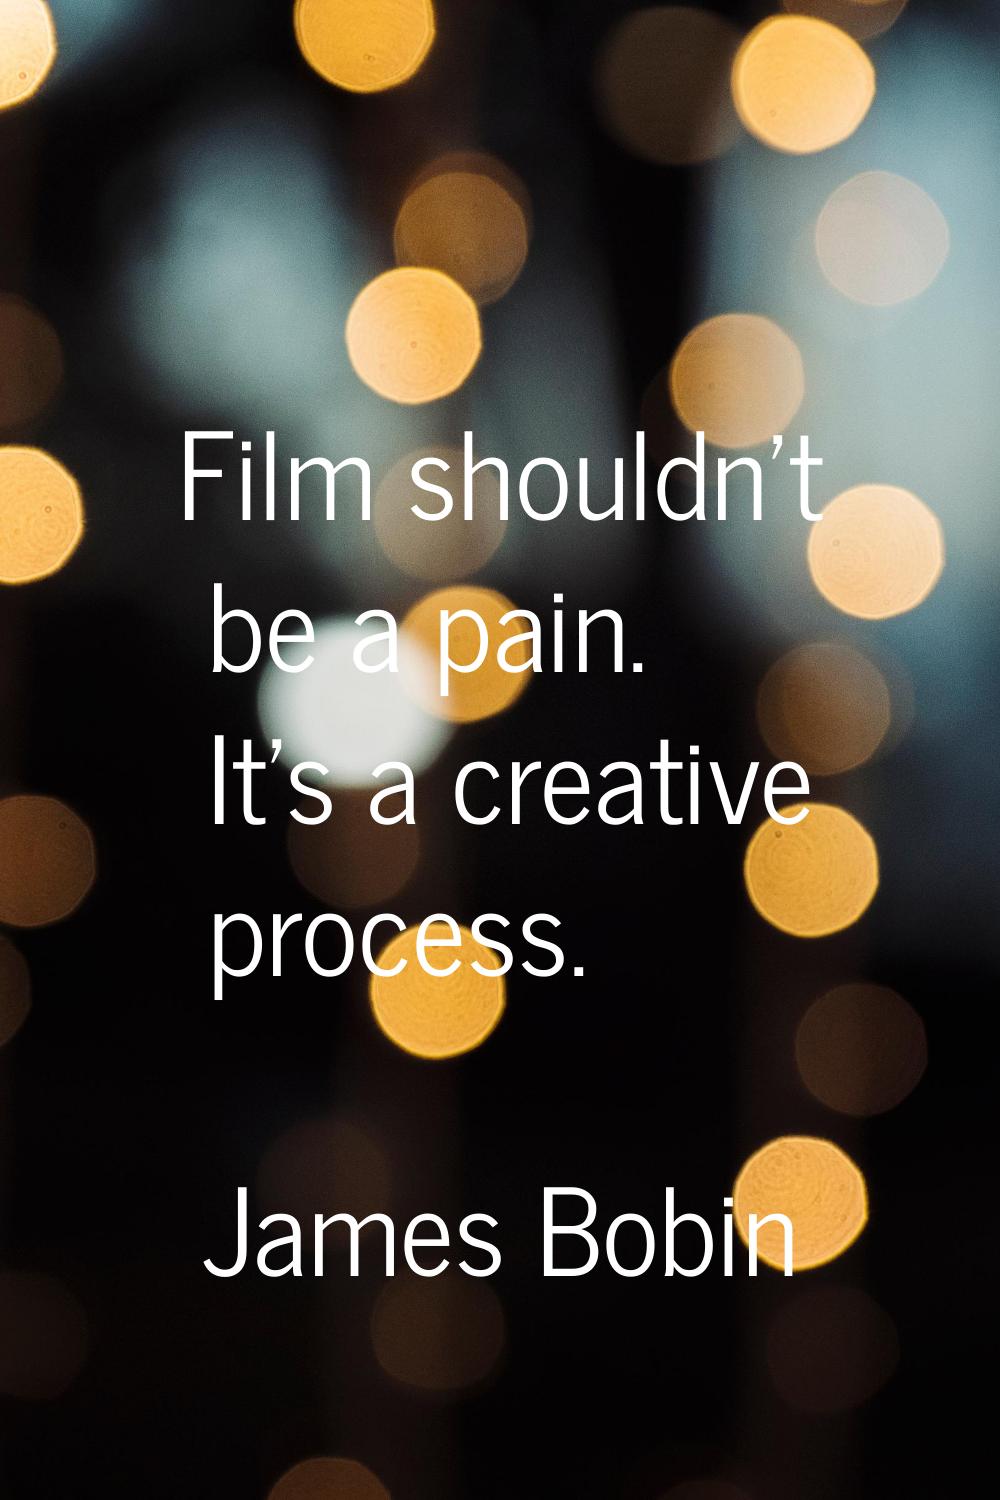 Film shouldn't be a pain. It's a creative process.